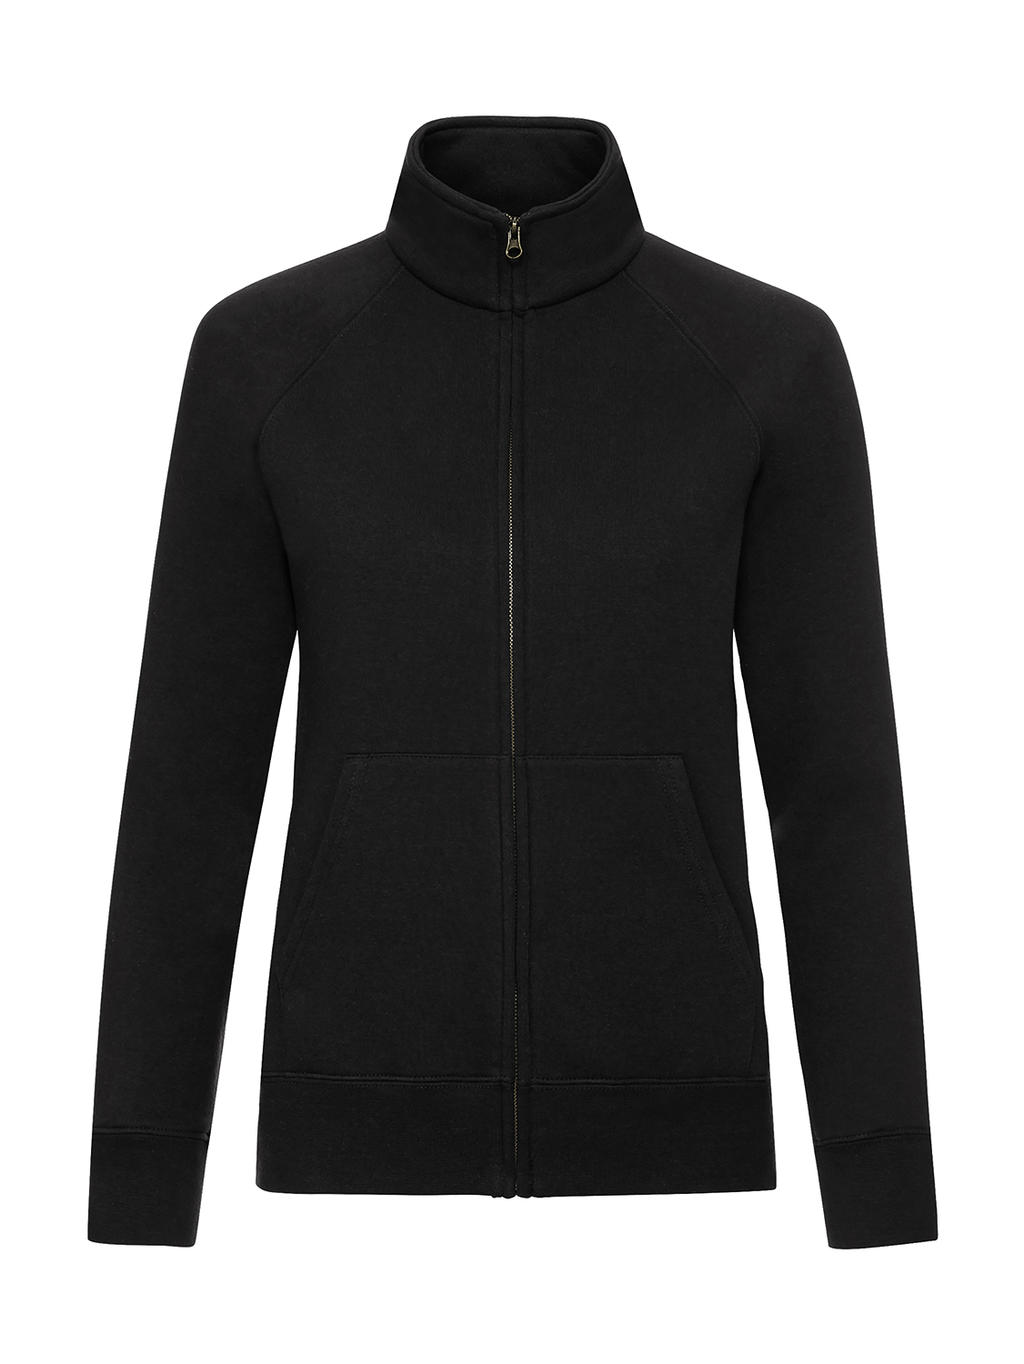  Ladies Premium Sweat Jacket in Farbe Black